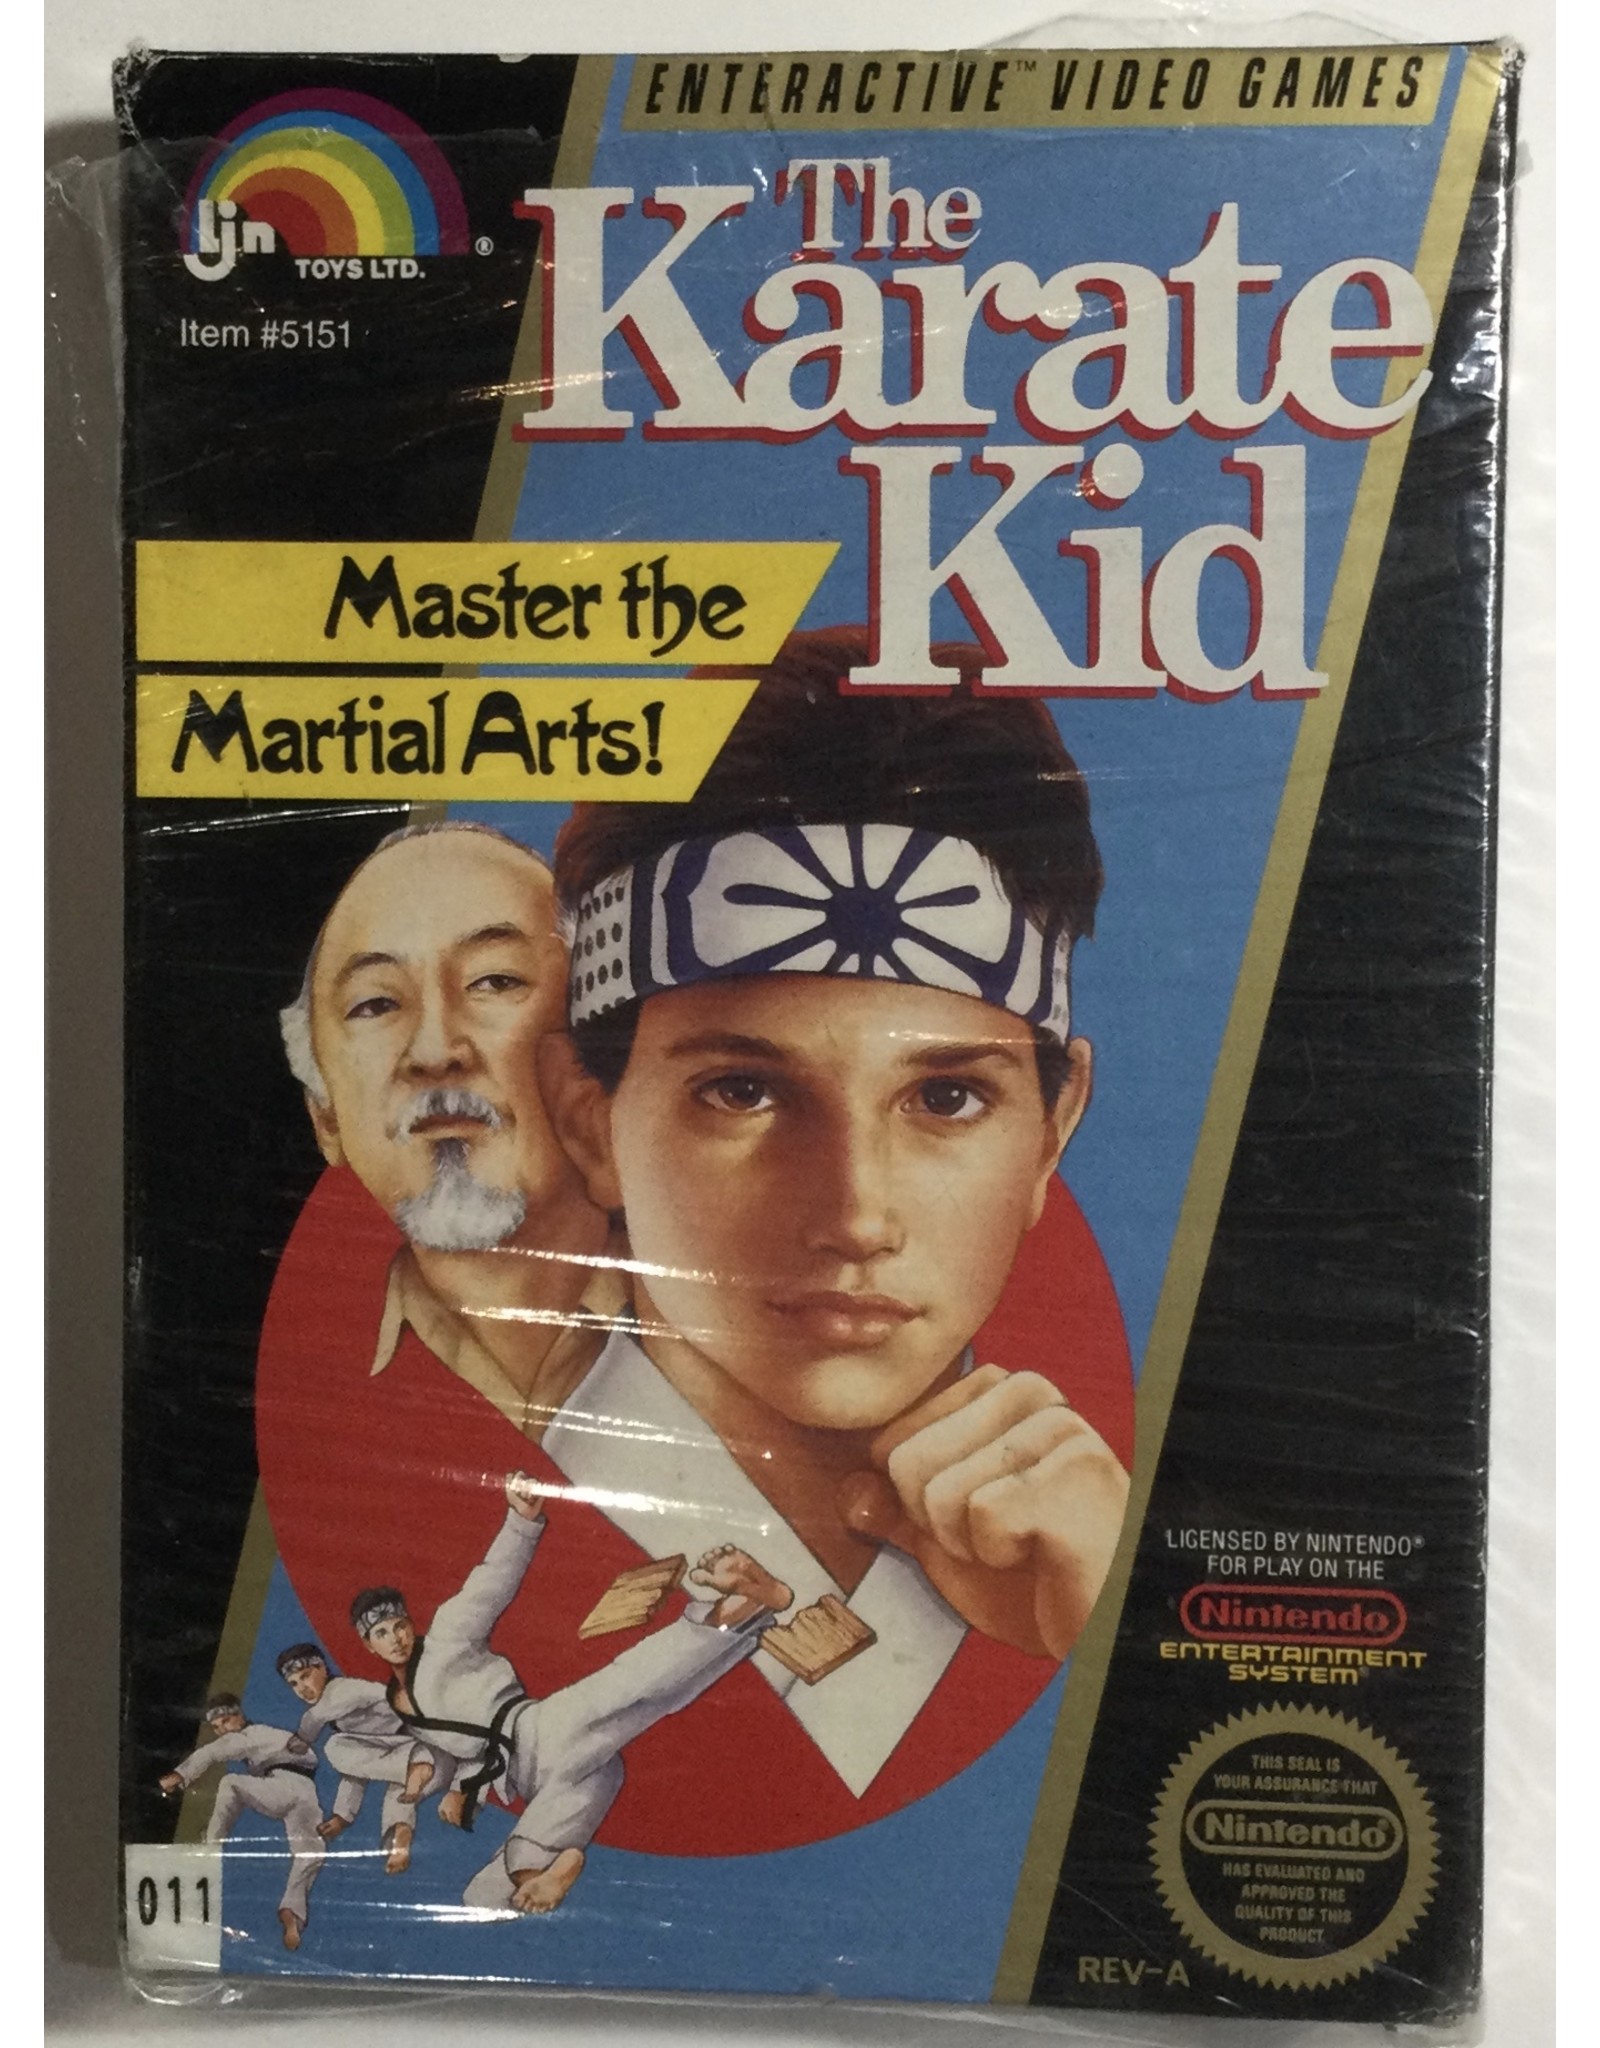 LJN The Karate Kid for Nintendo Entertainment system (NES)